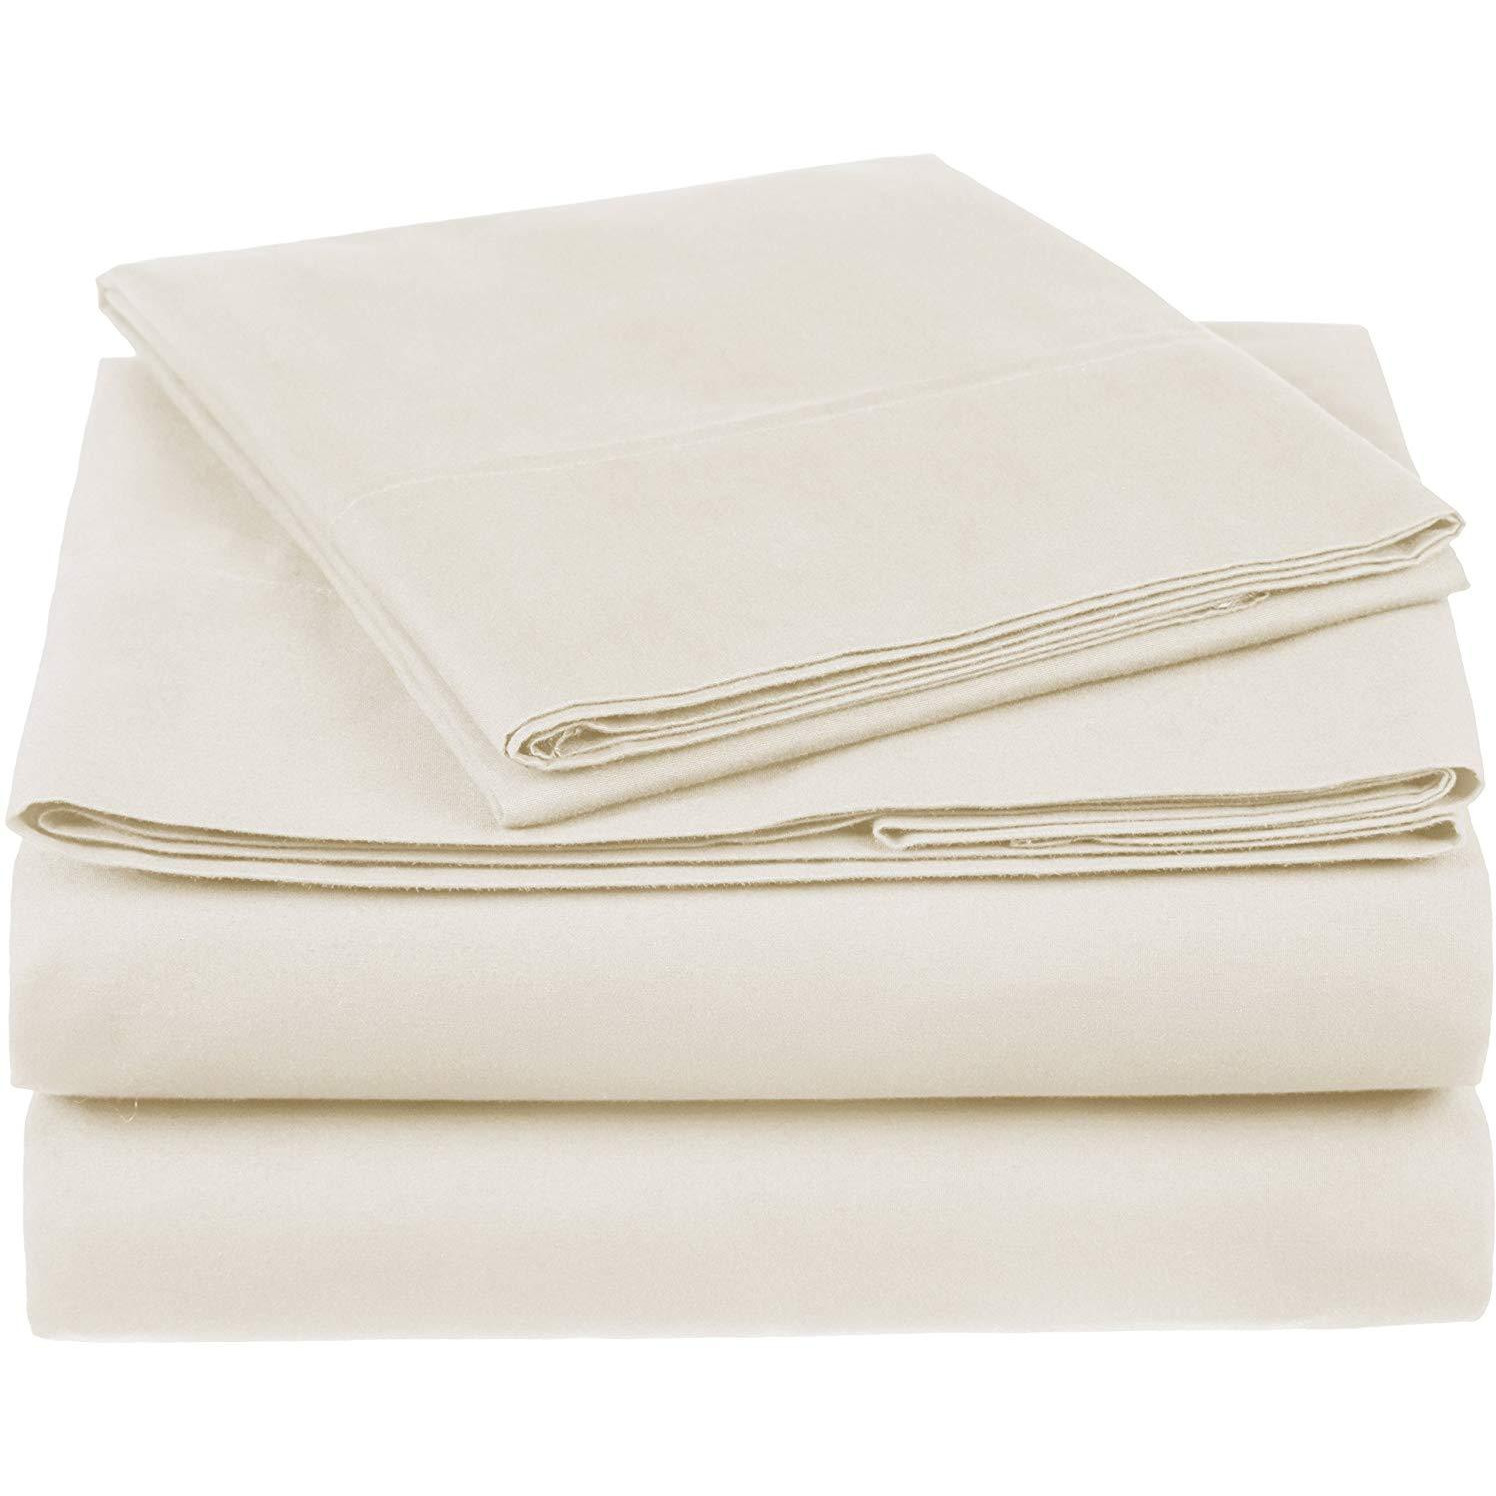 100% Cotton Sheet Set - 500 Thread Count (Piece:6 PIECE, Size:QUEEN, Color:TAUPE)